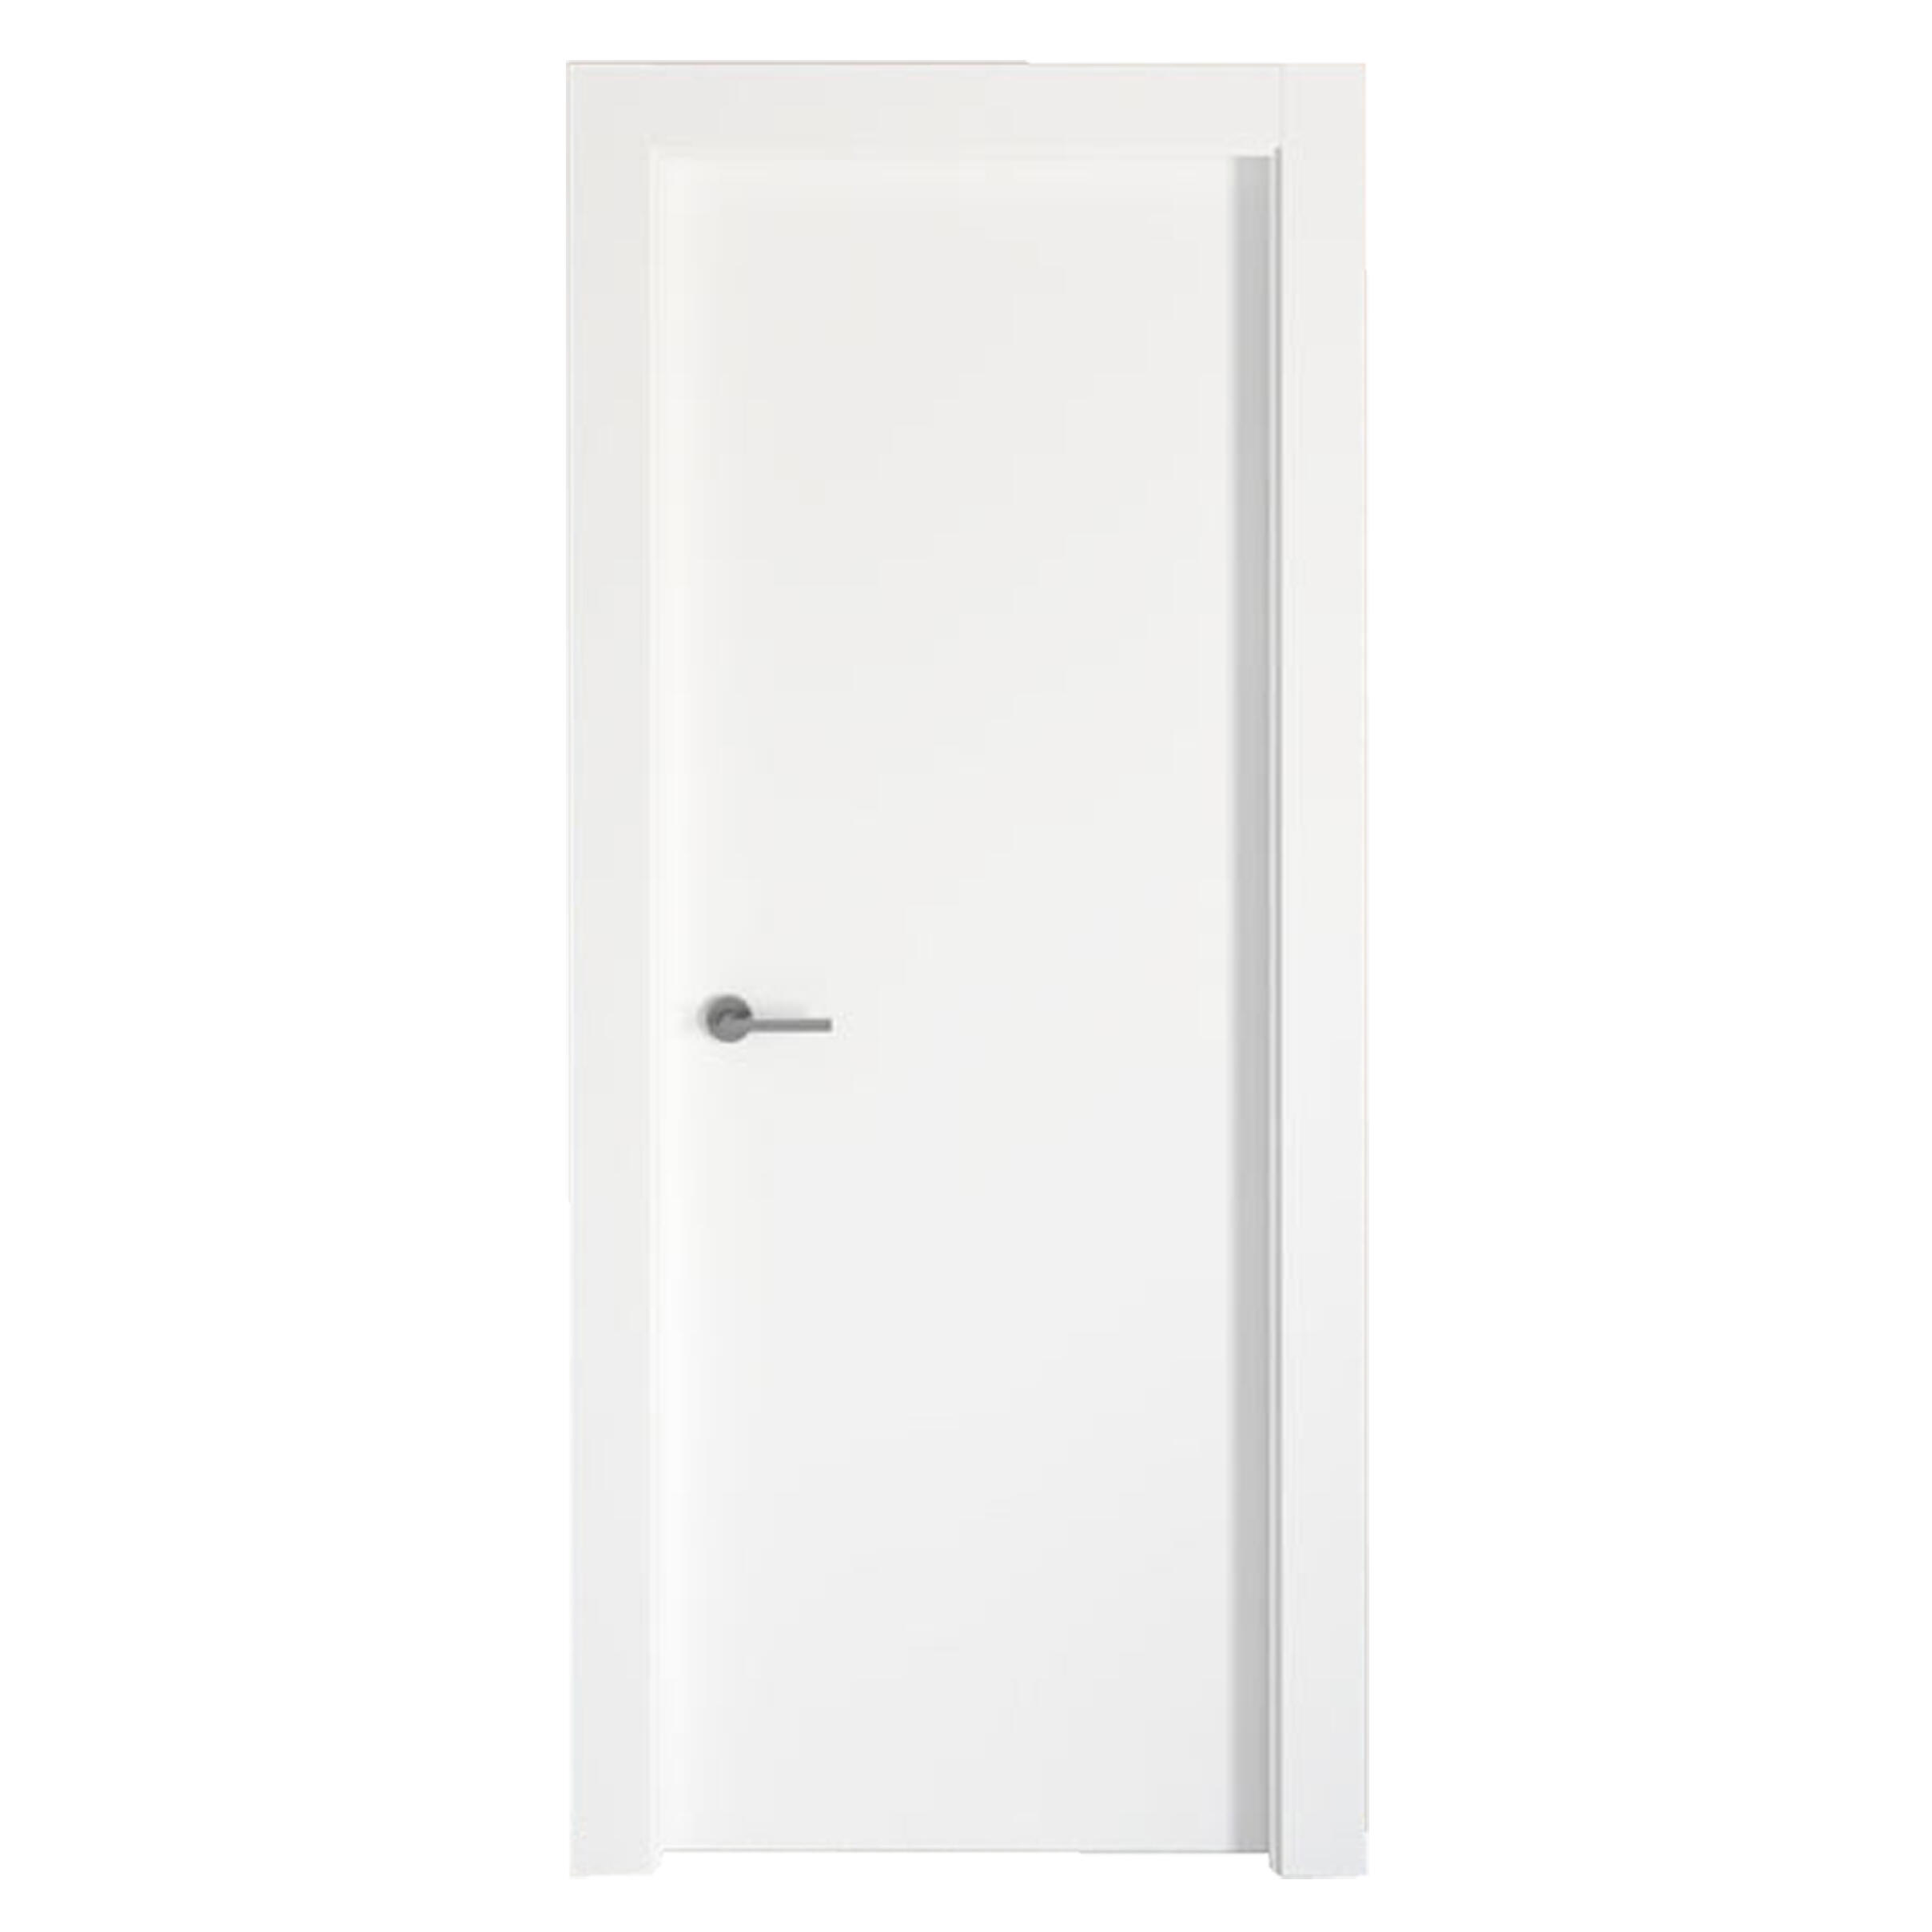 Puerta ciega bari plus blanca 9x62,5 cm i